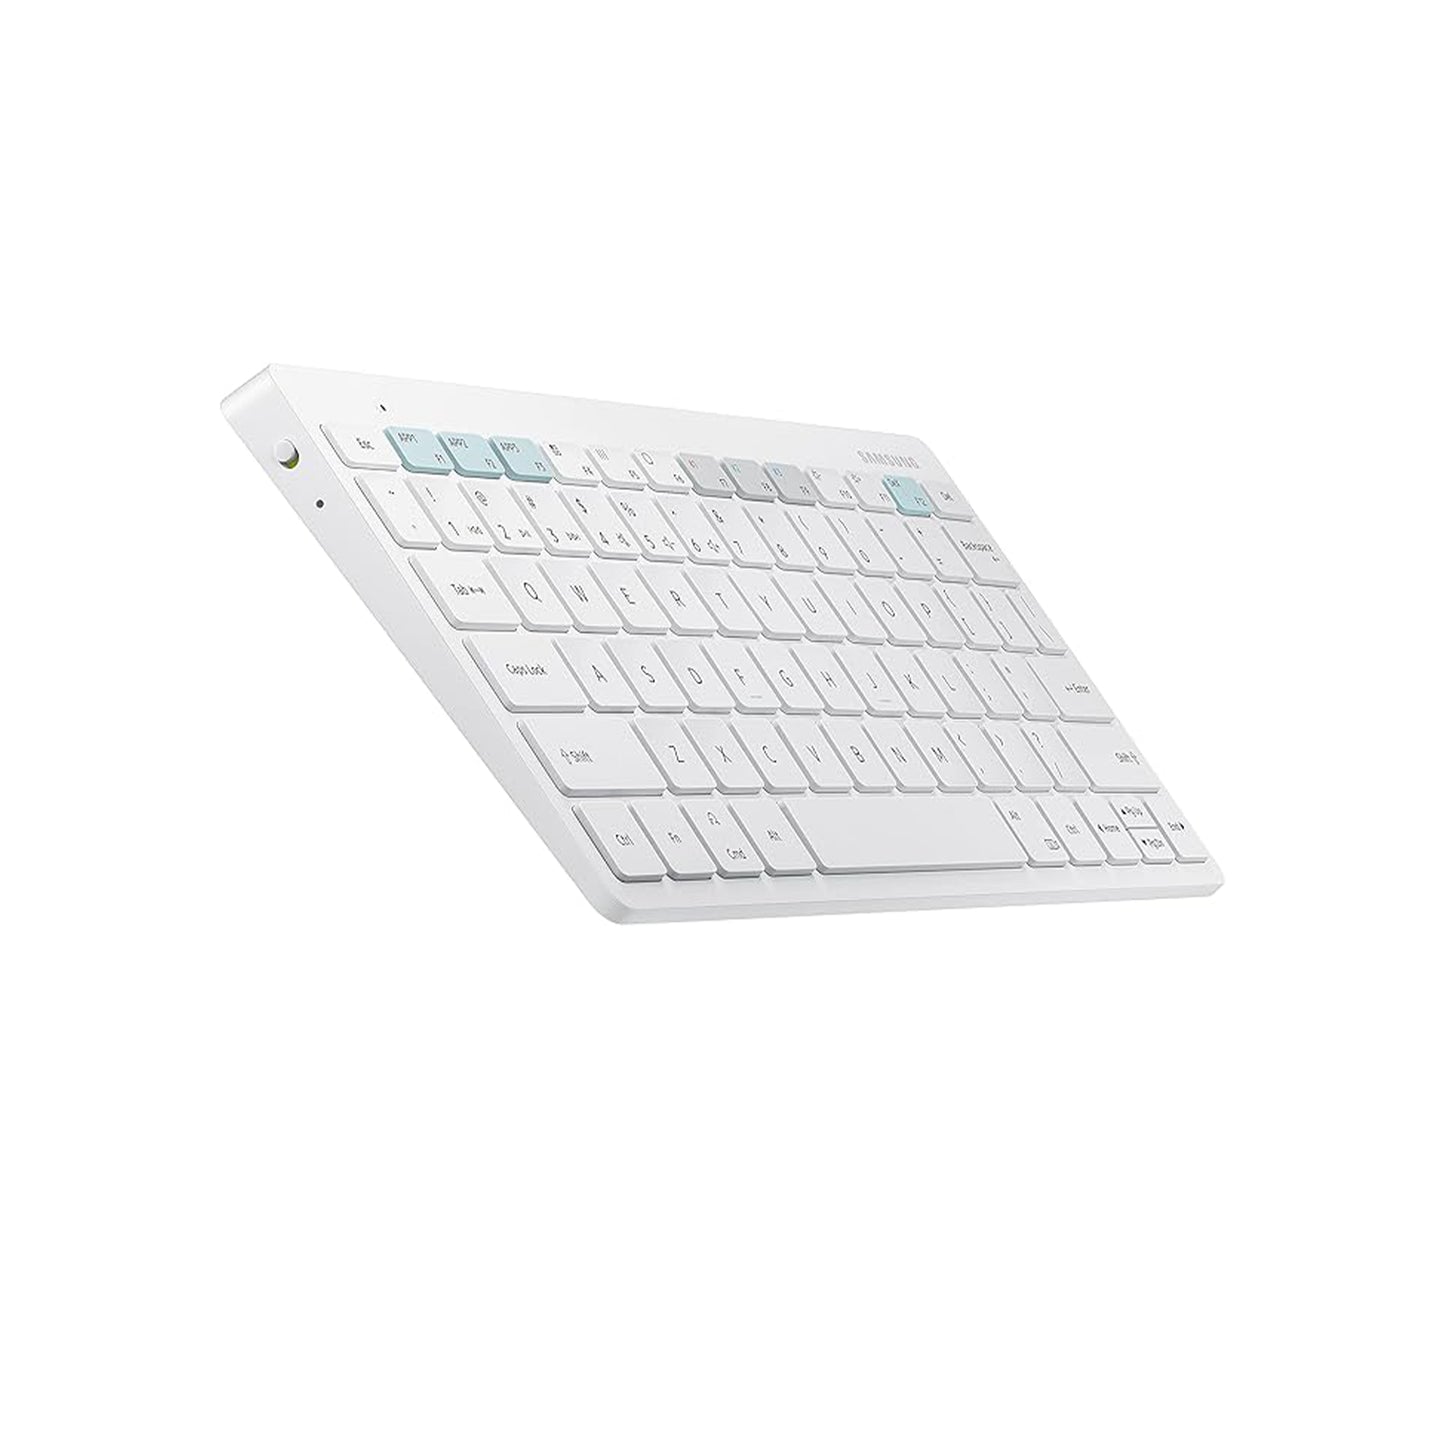 SAMSUNG Official Smart Keyboard Trio 500 (EJ-B3400UWEGUS), White - US Model